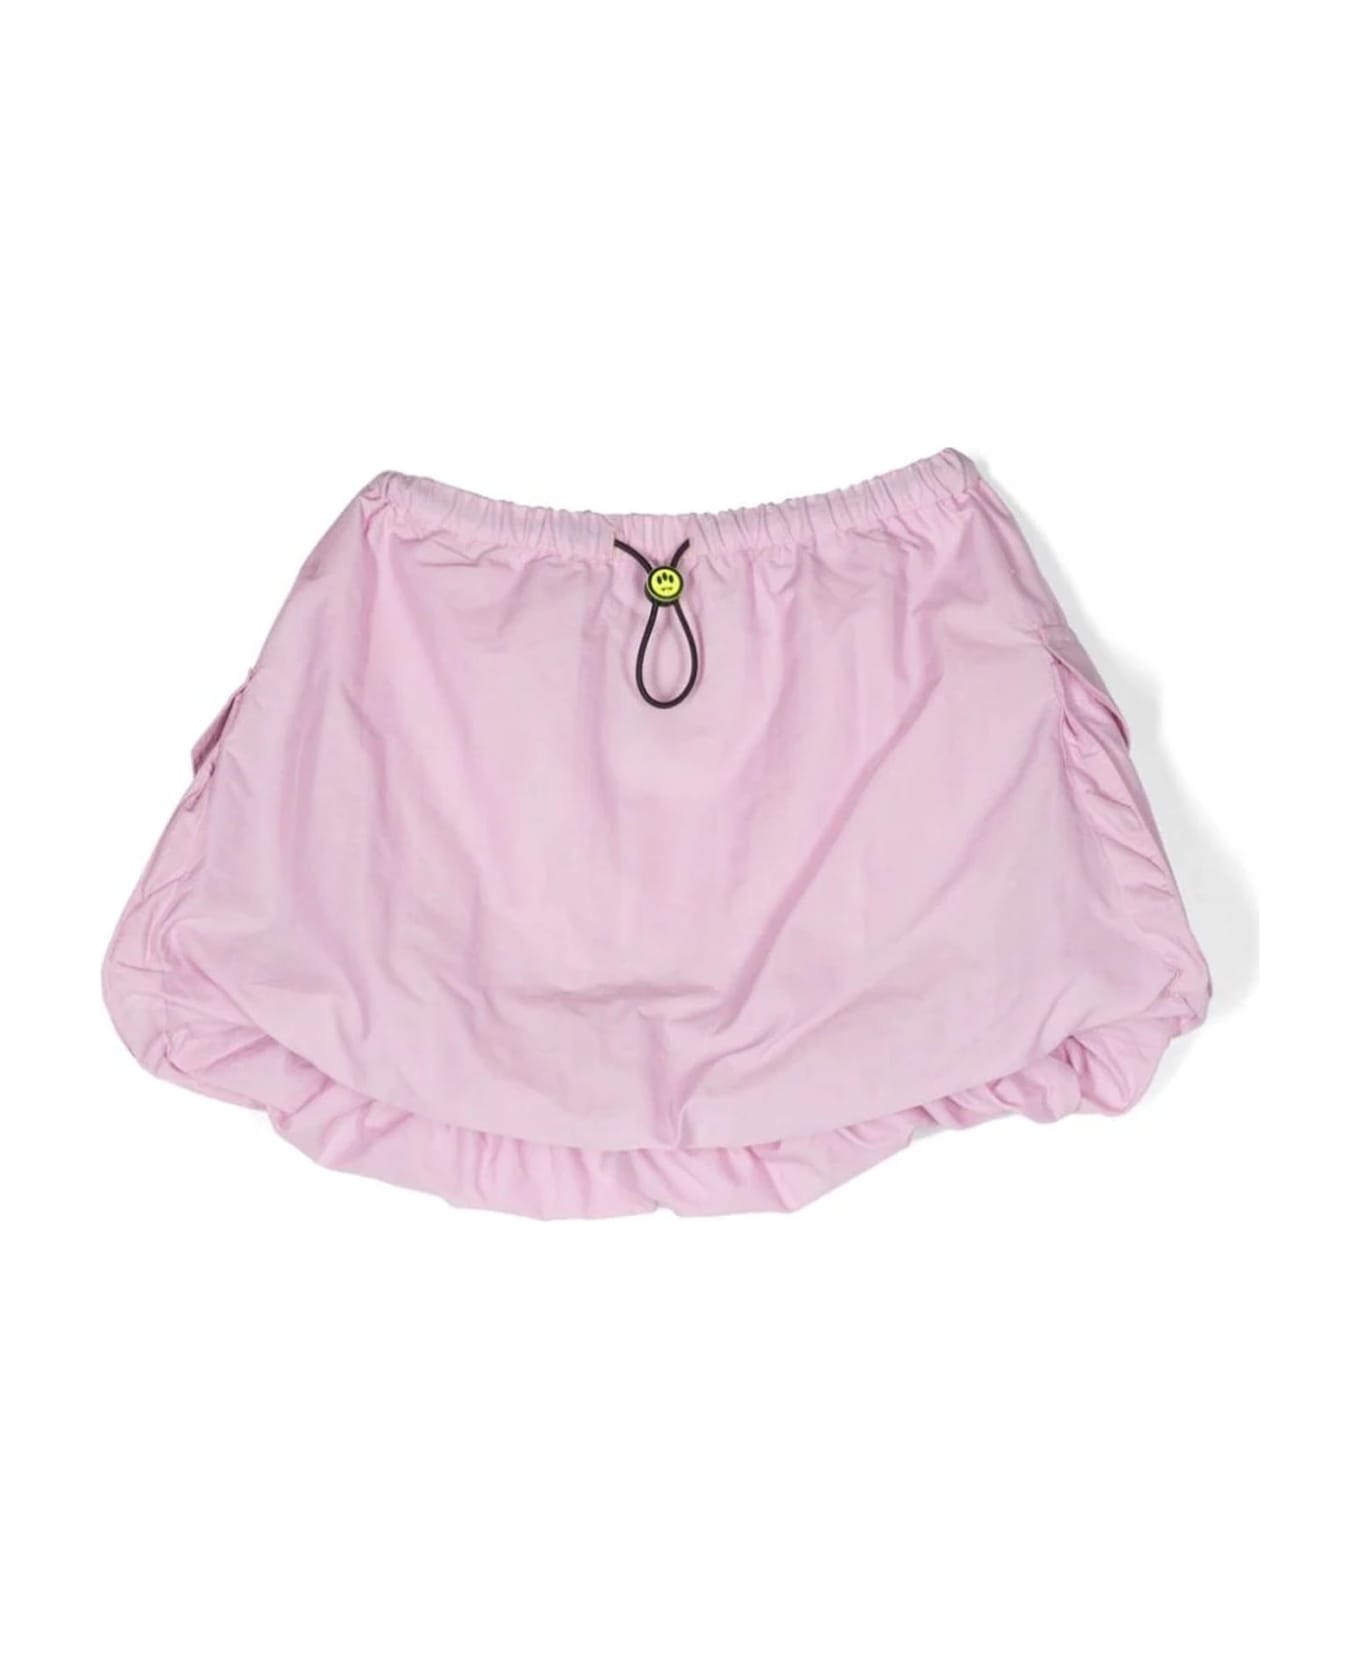 Barrow 's Skirts Pink - Pink ボトムス